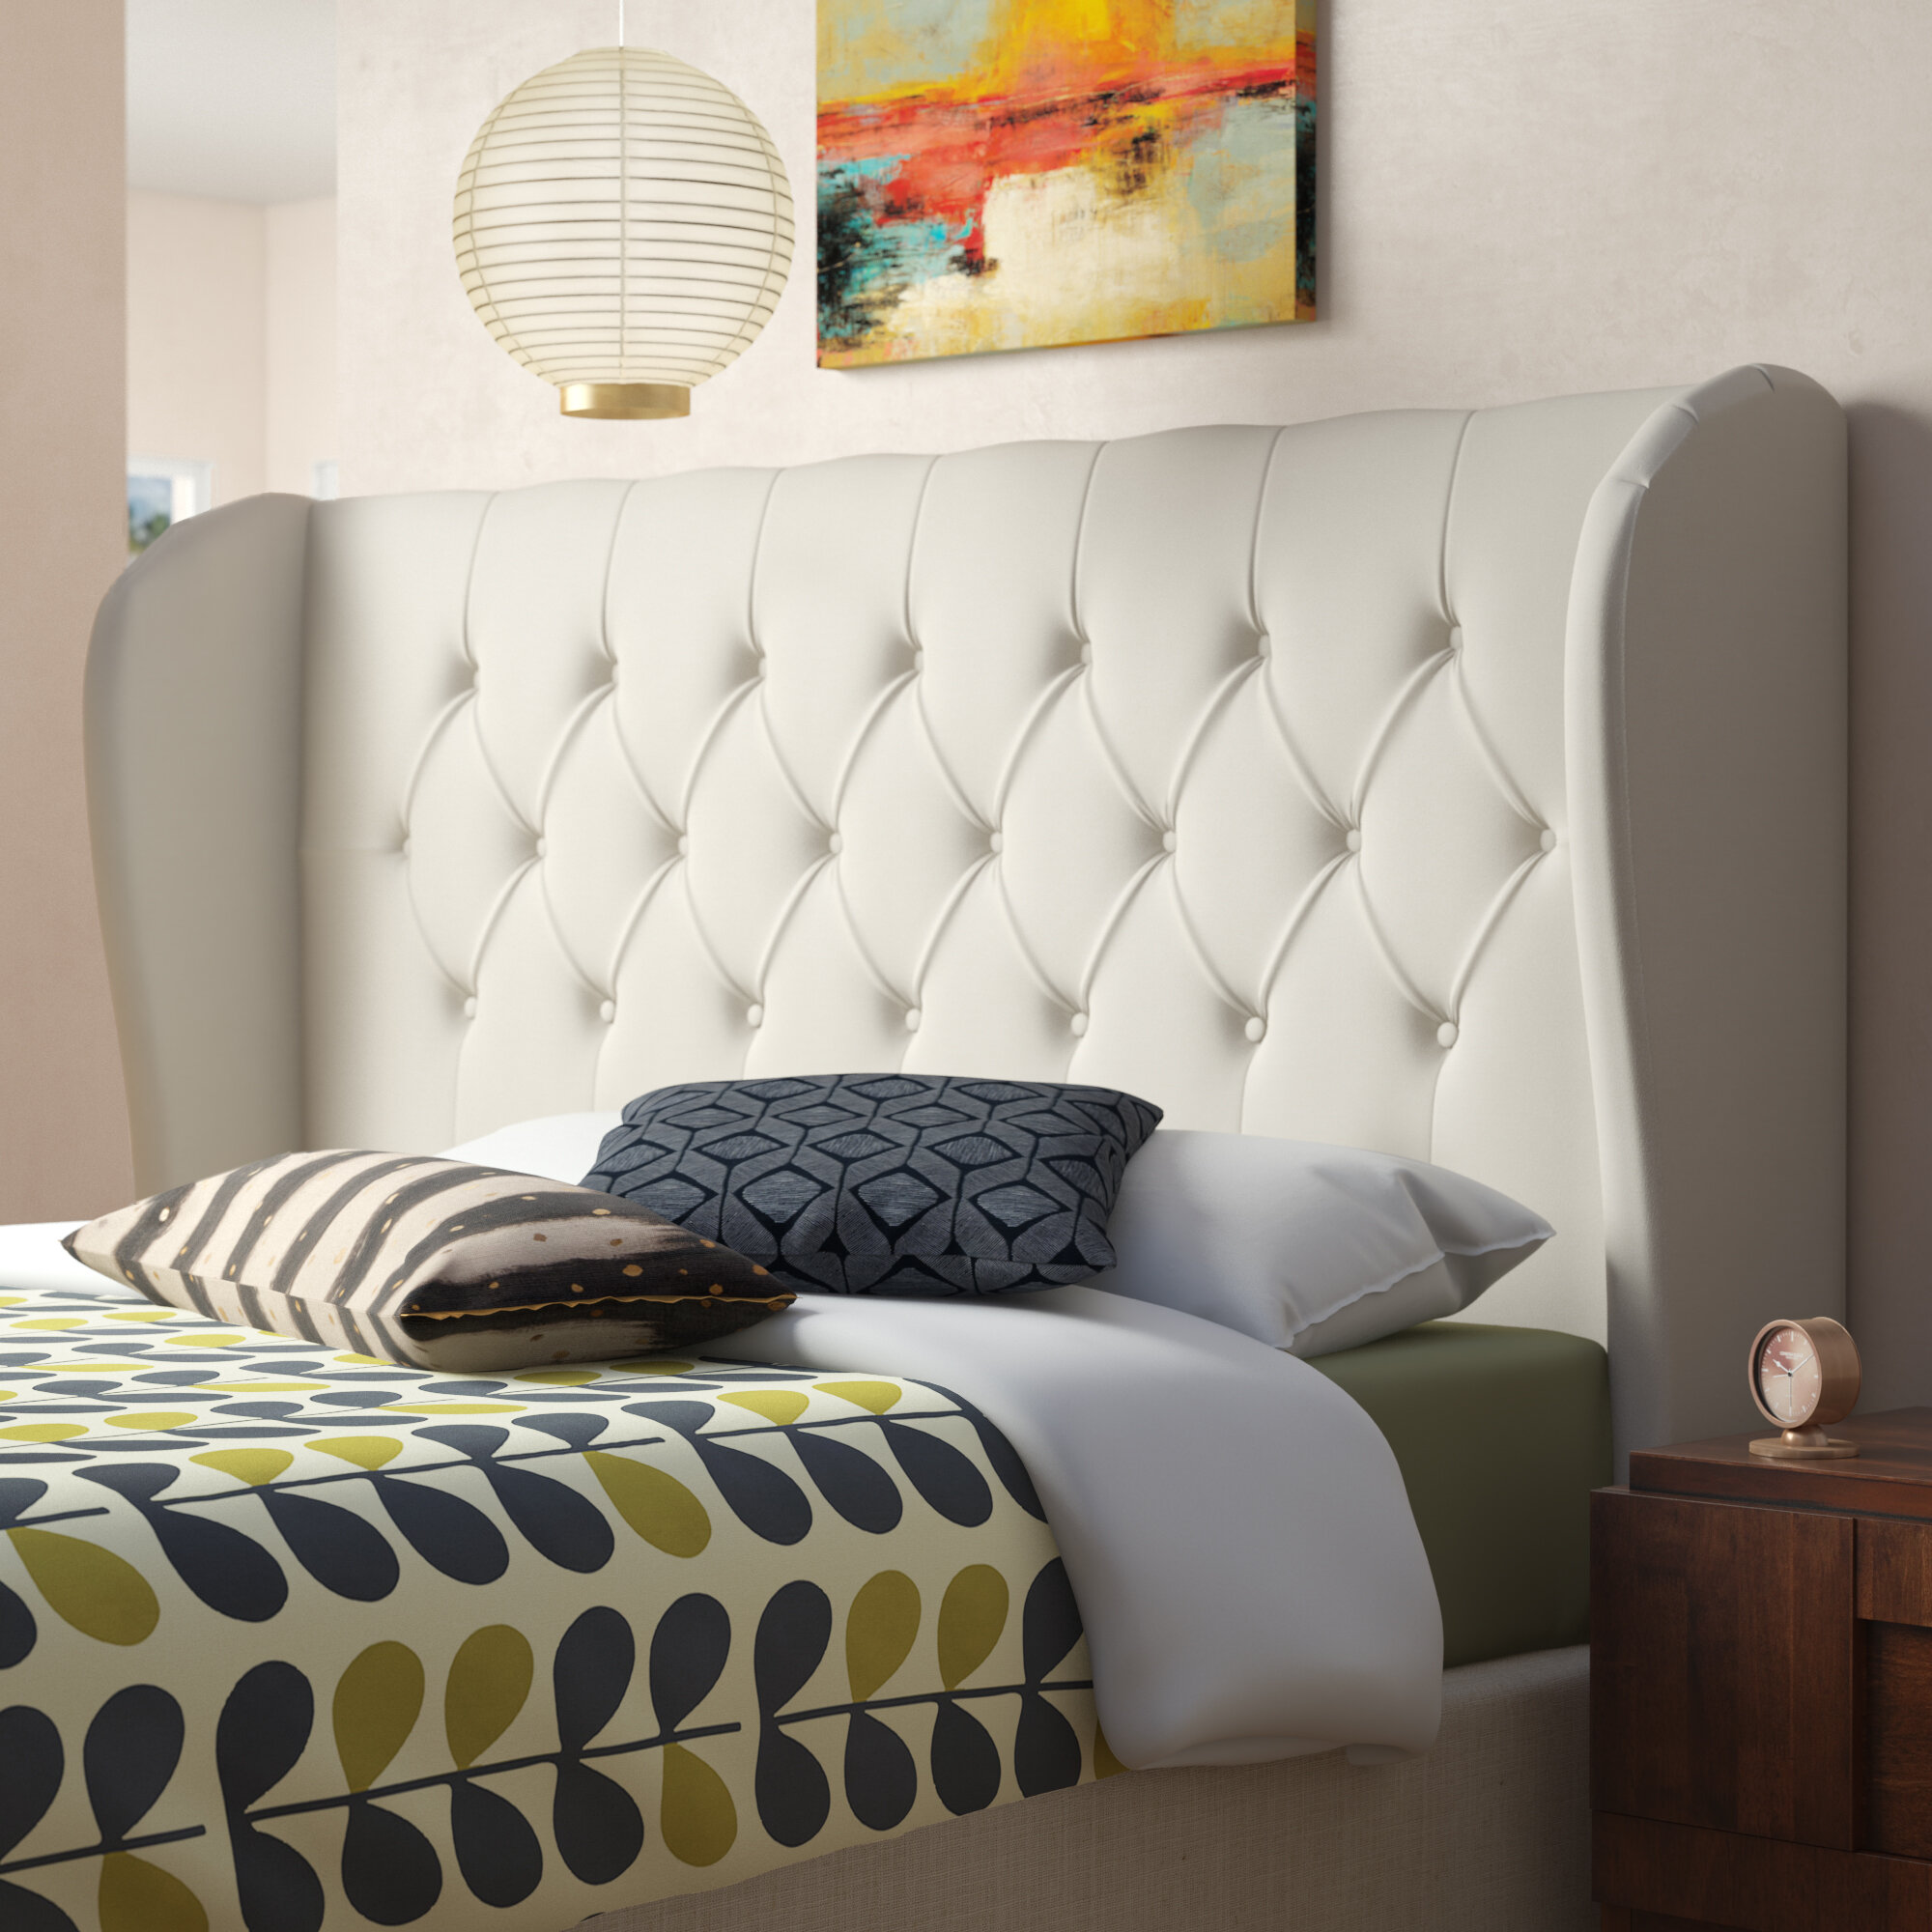 Brayden Studio® Twin Upholstered Pillow Back Futon Chair & Reviews